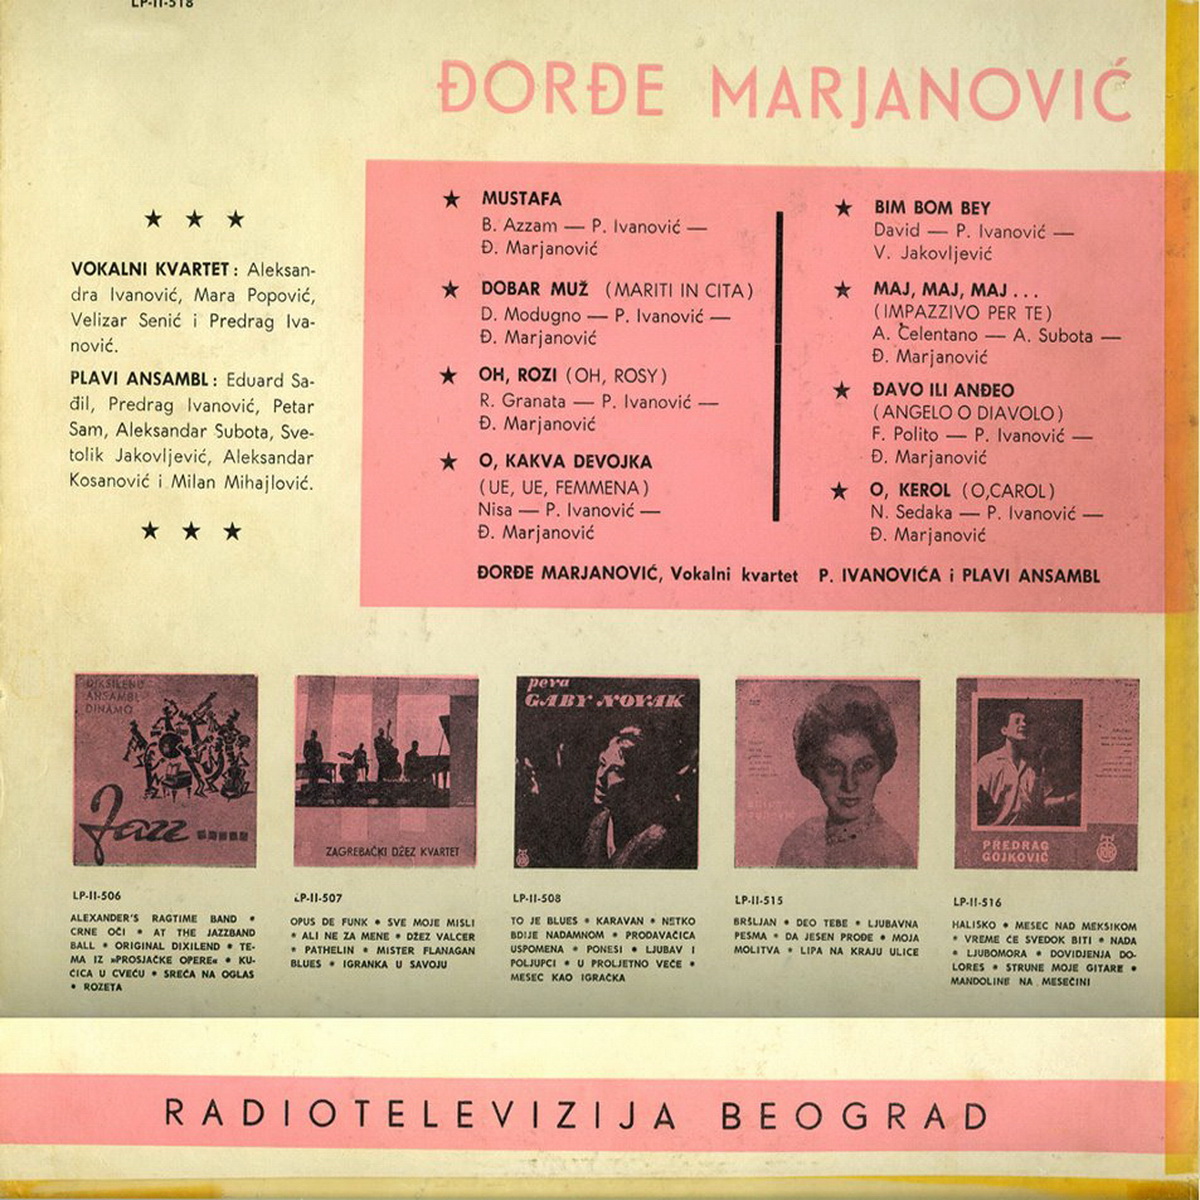 Djordje Marjanovic 1961 Mustafa b